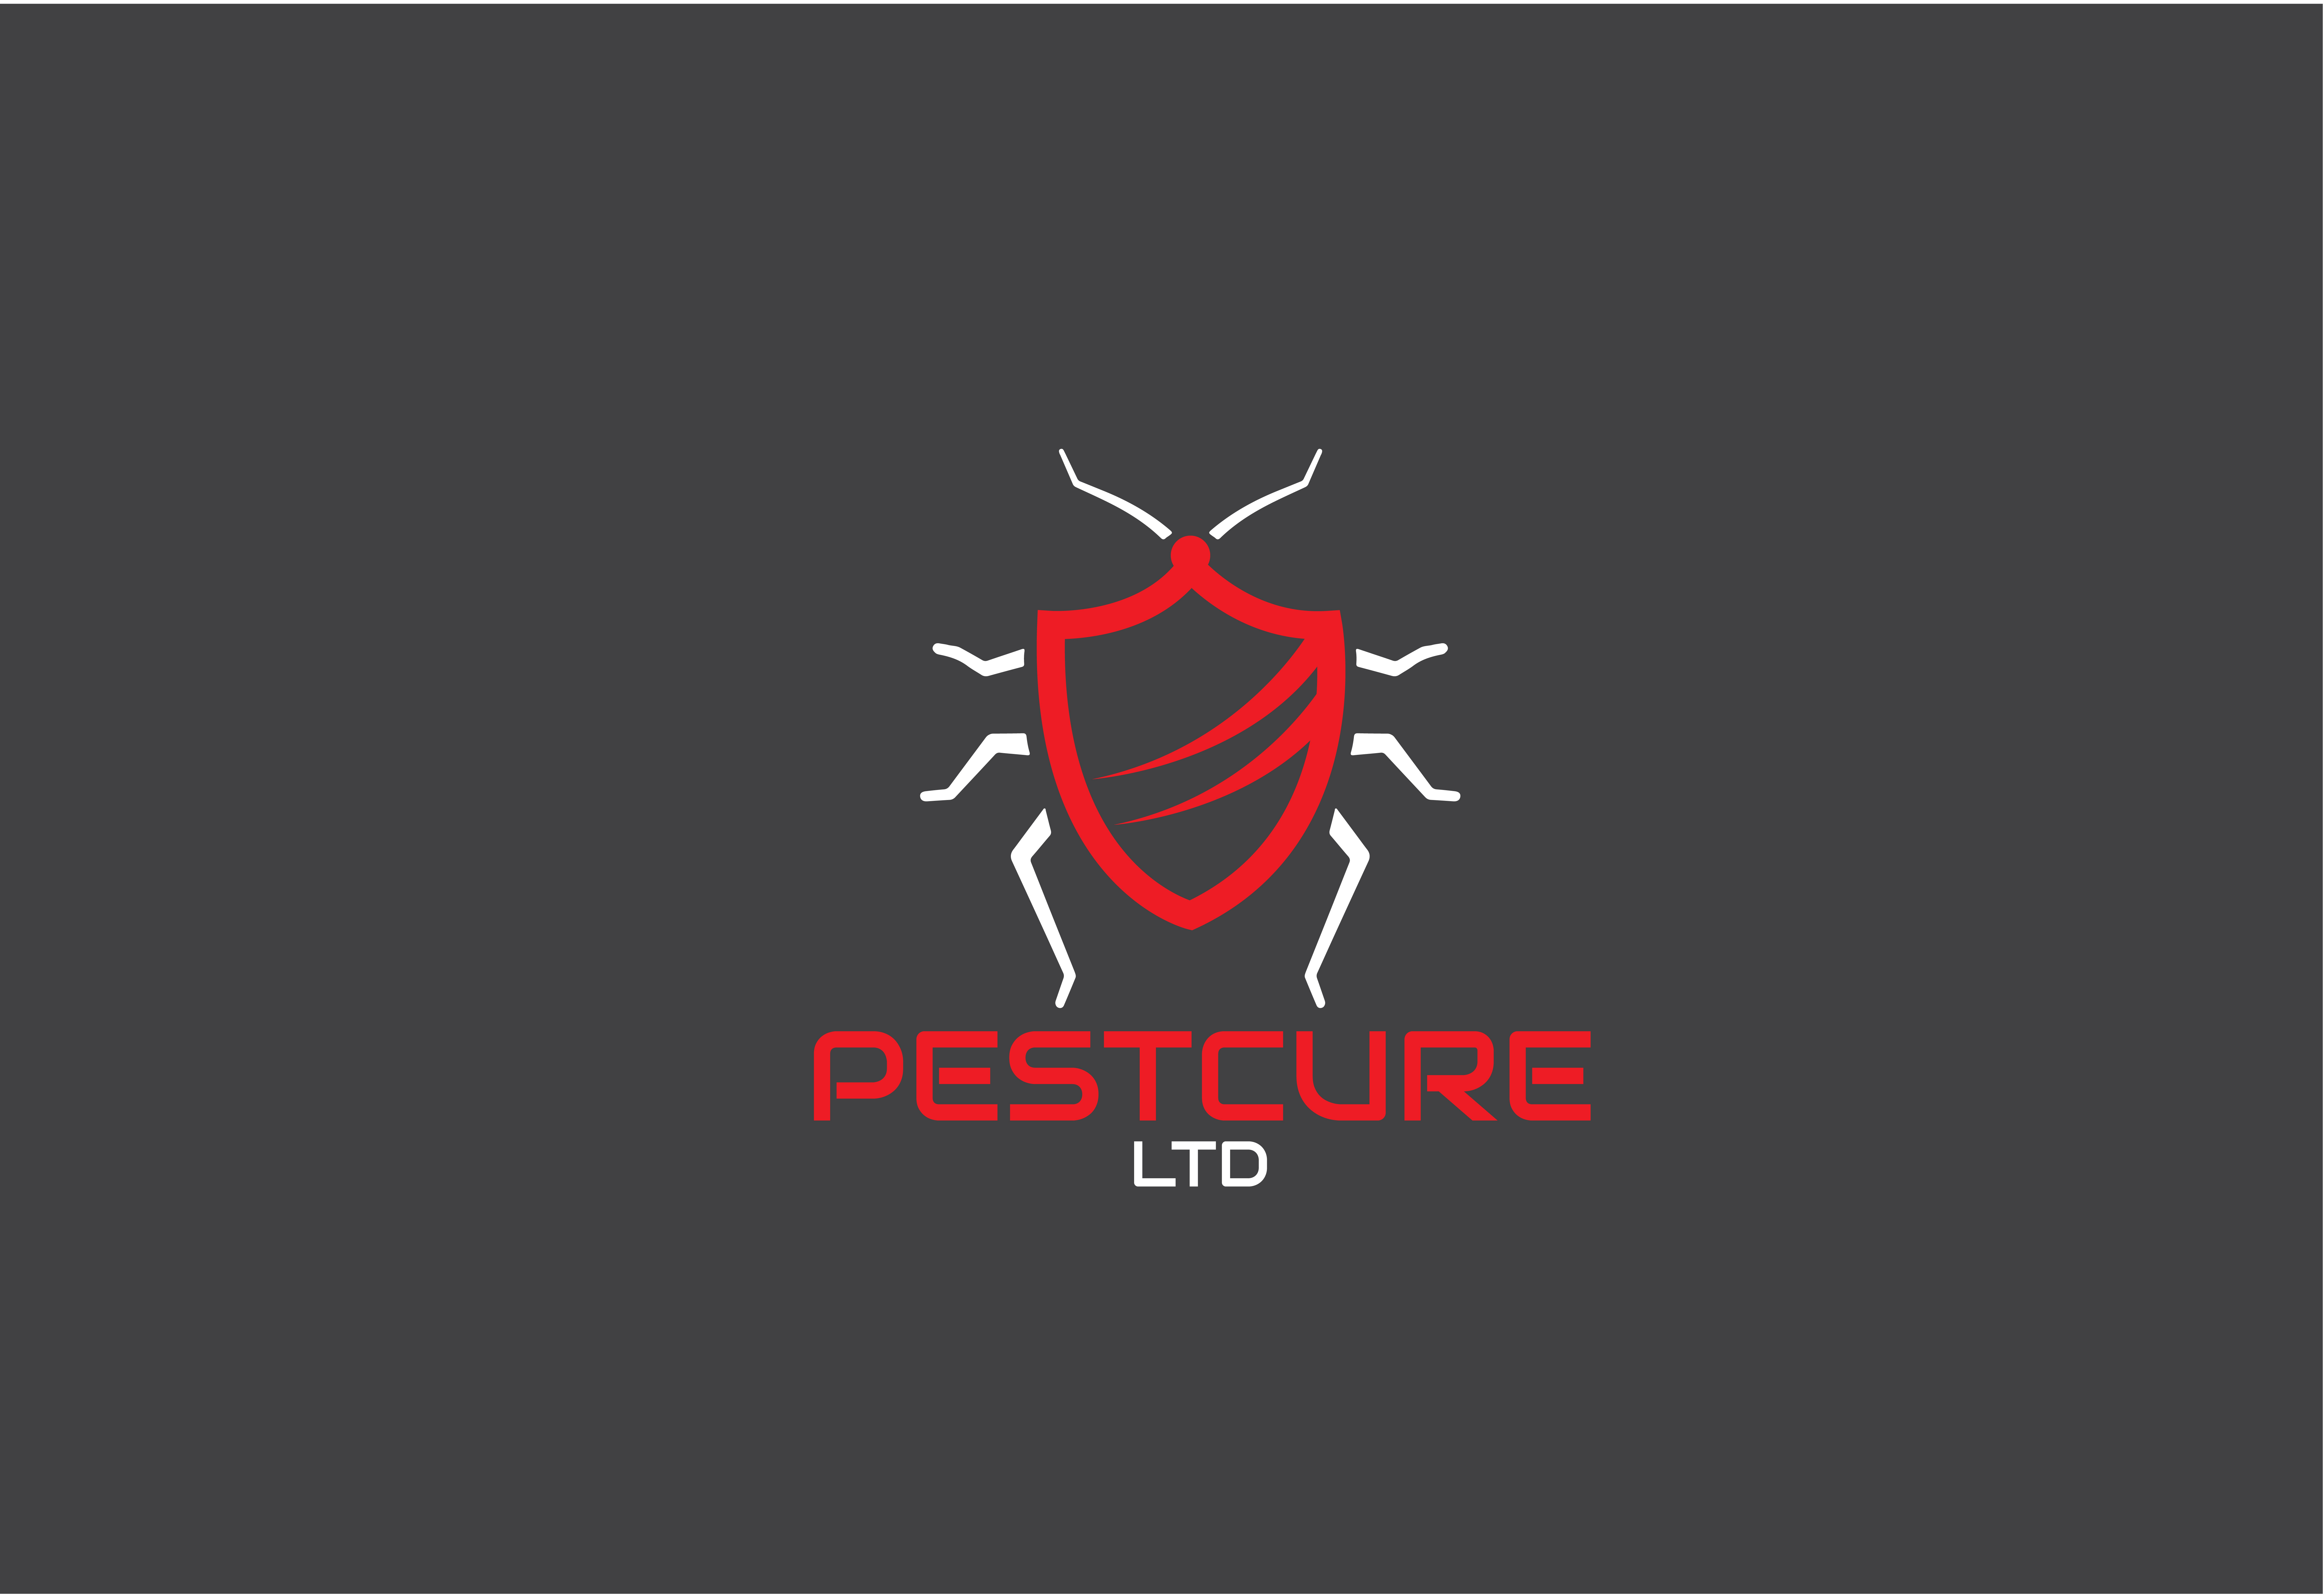 Logo of Pestcure ltd